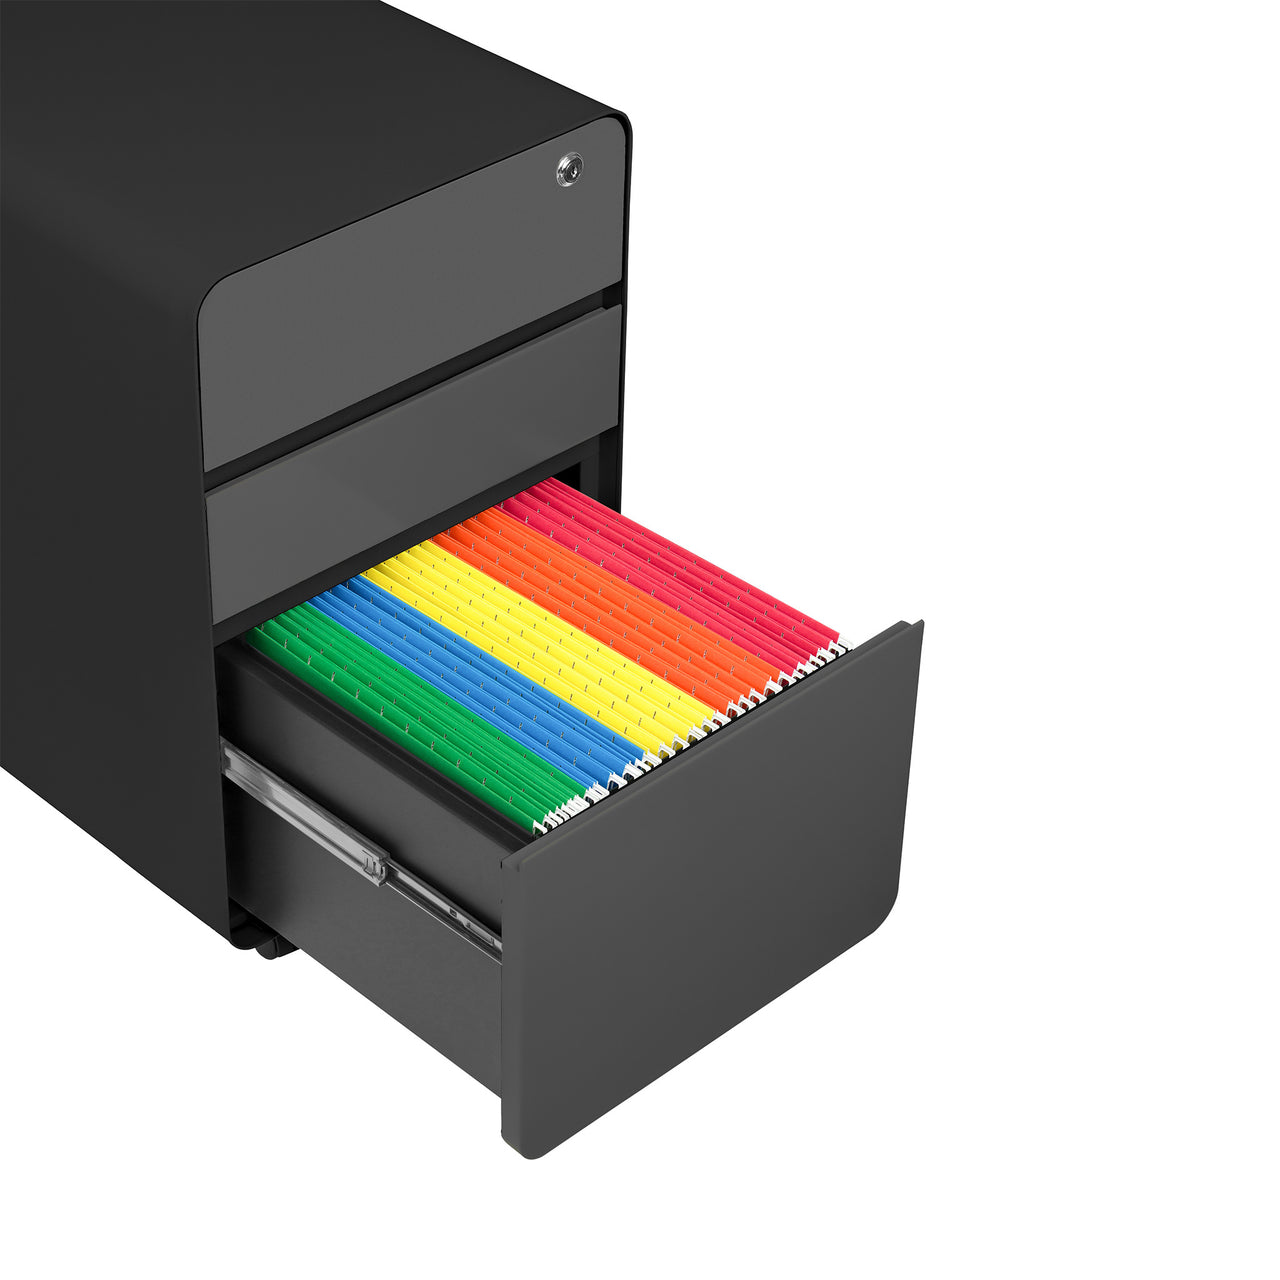 Stockpile Flat 3-Drawer File Cabinet (Black/Grey)